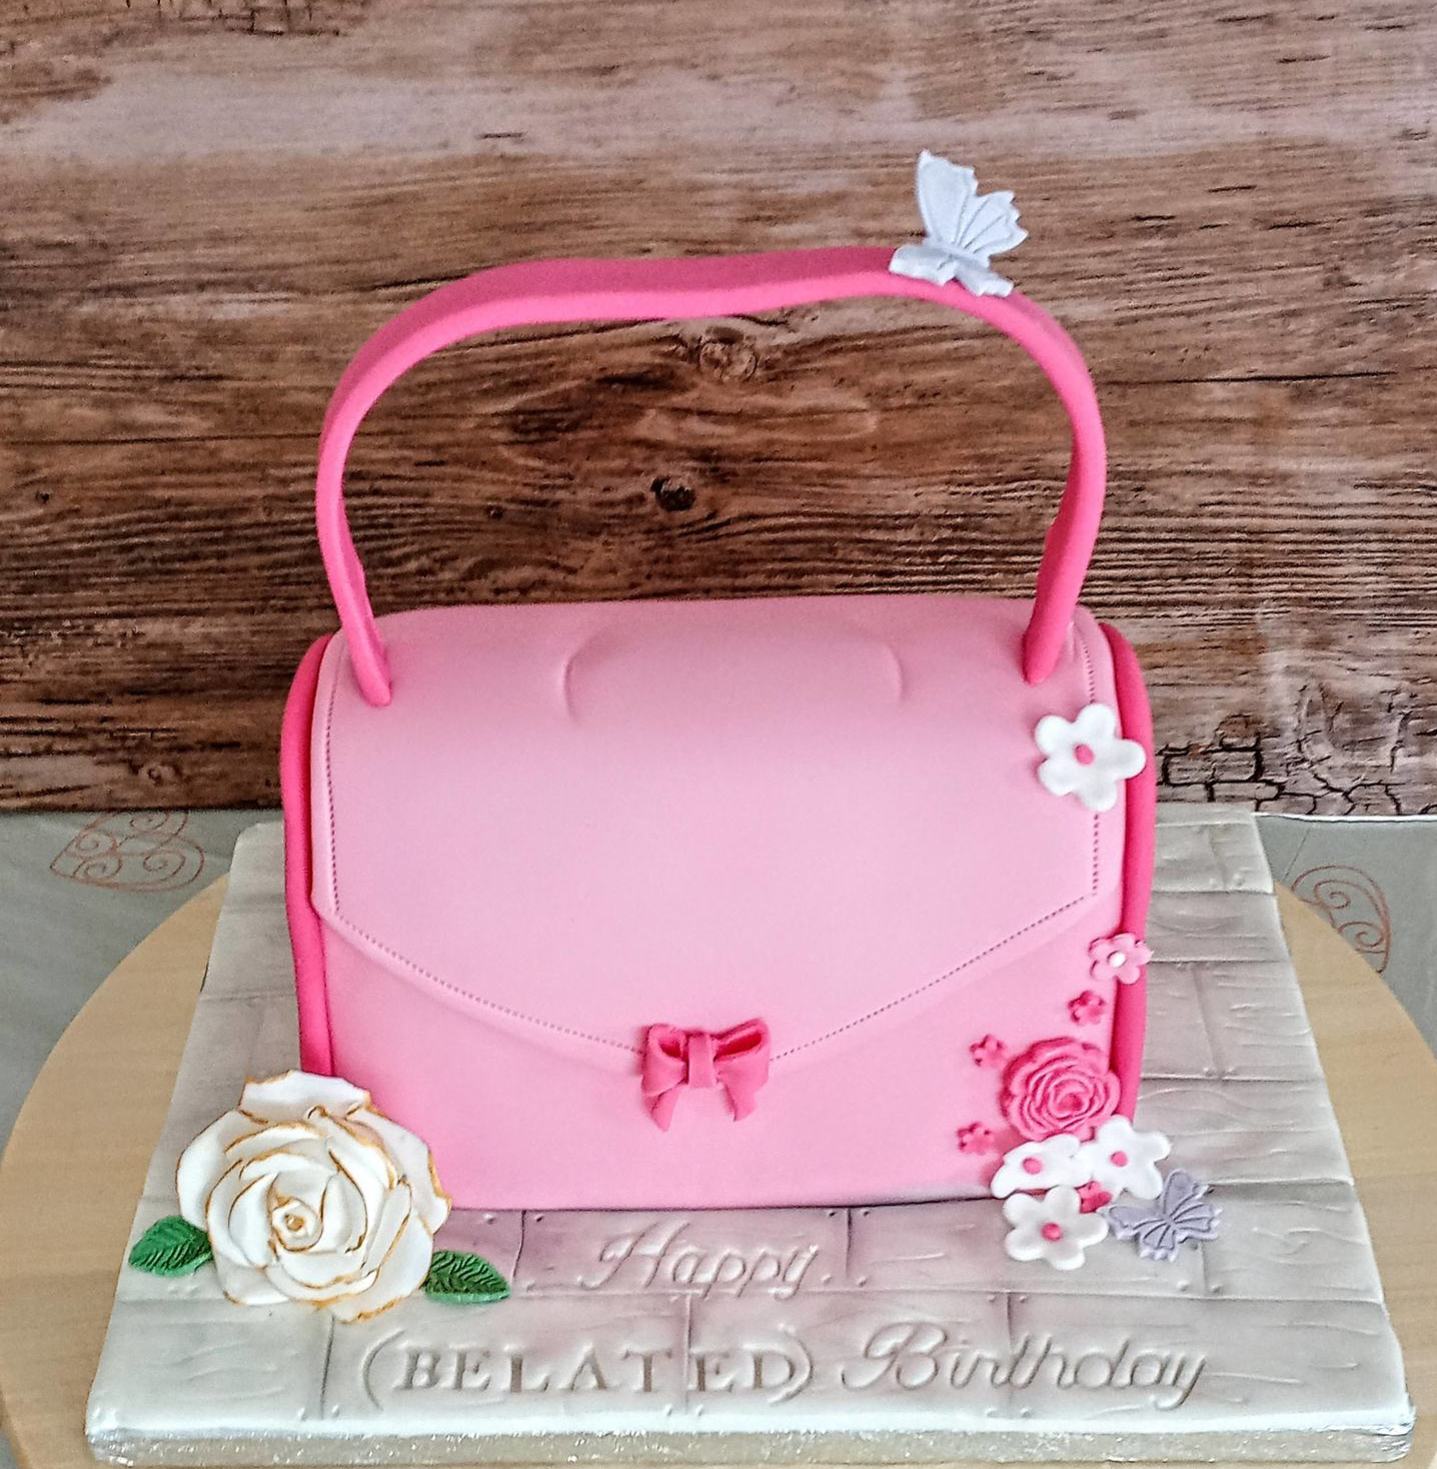 Cute pink ladies novelty handbag cake